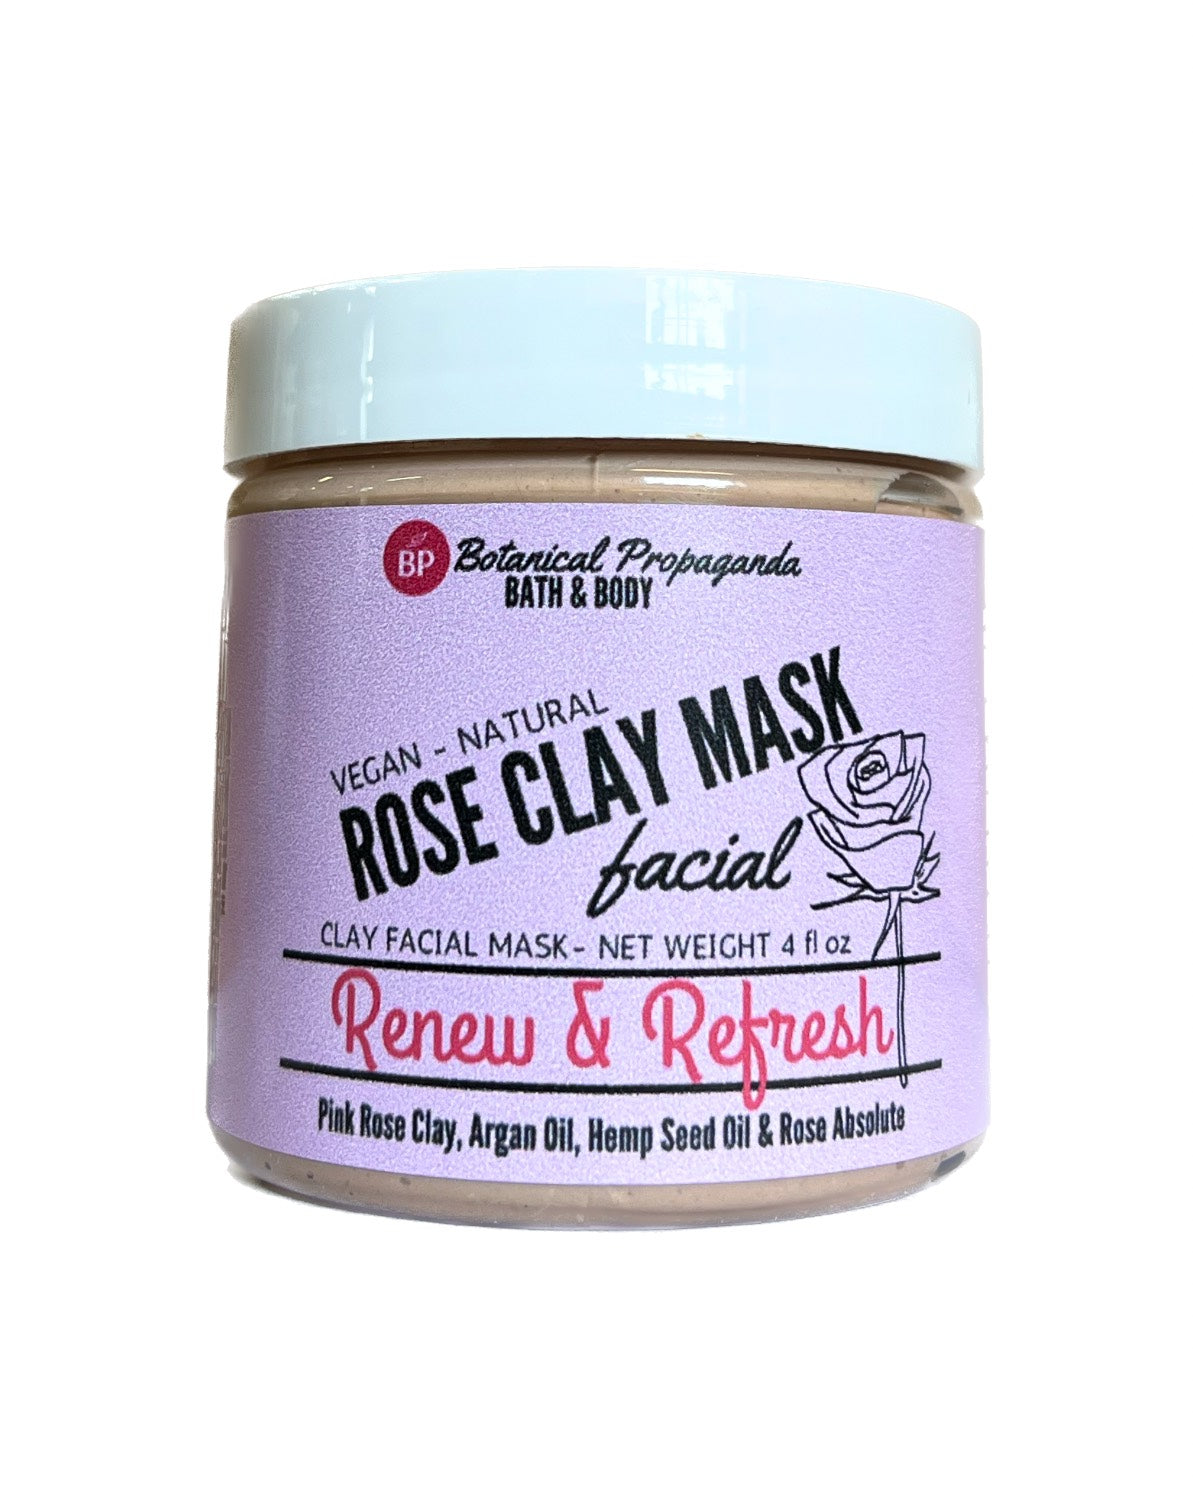 Rose Clay Mask (renew & refresh)